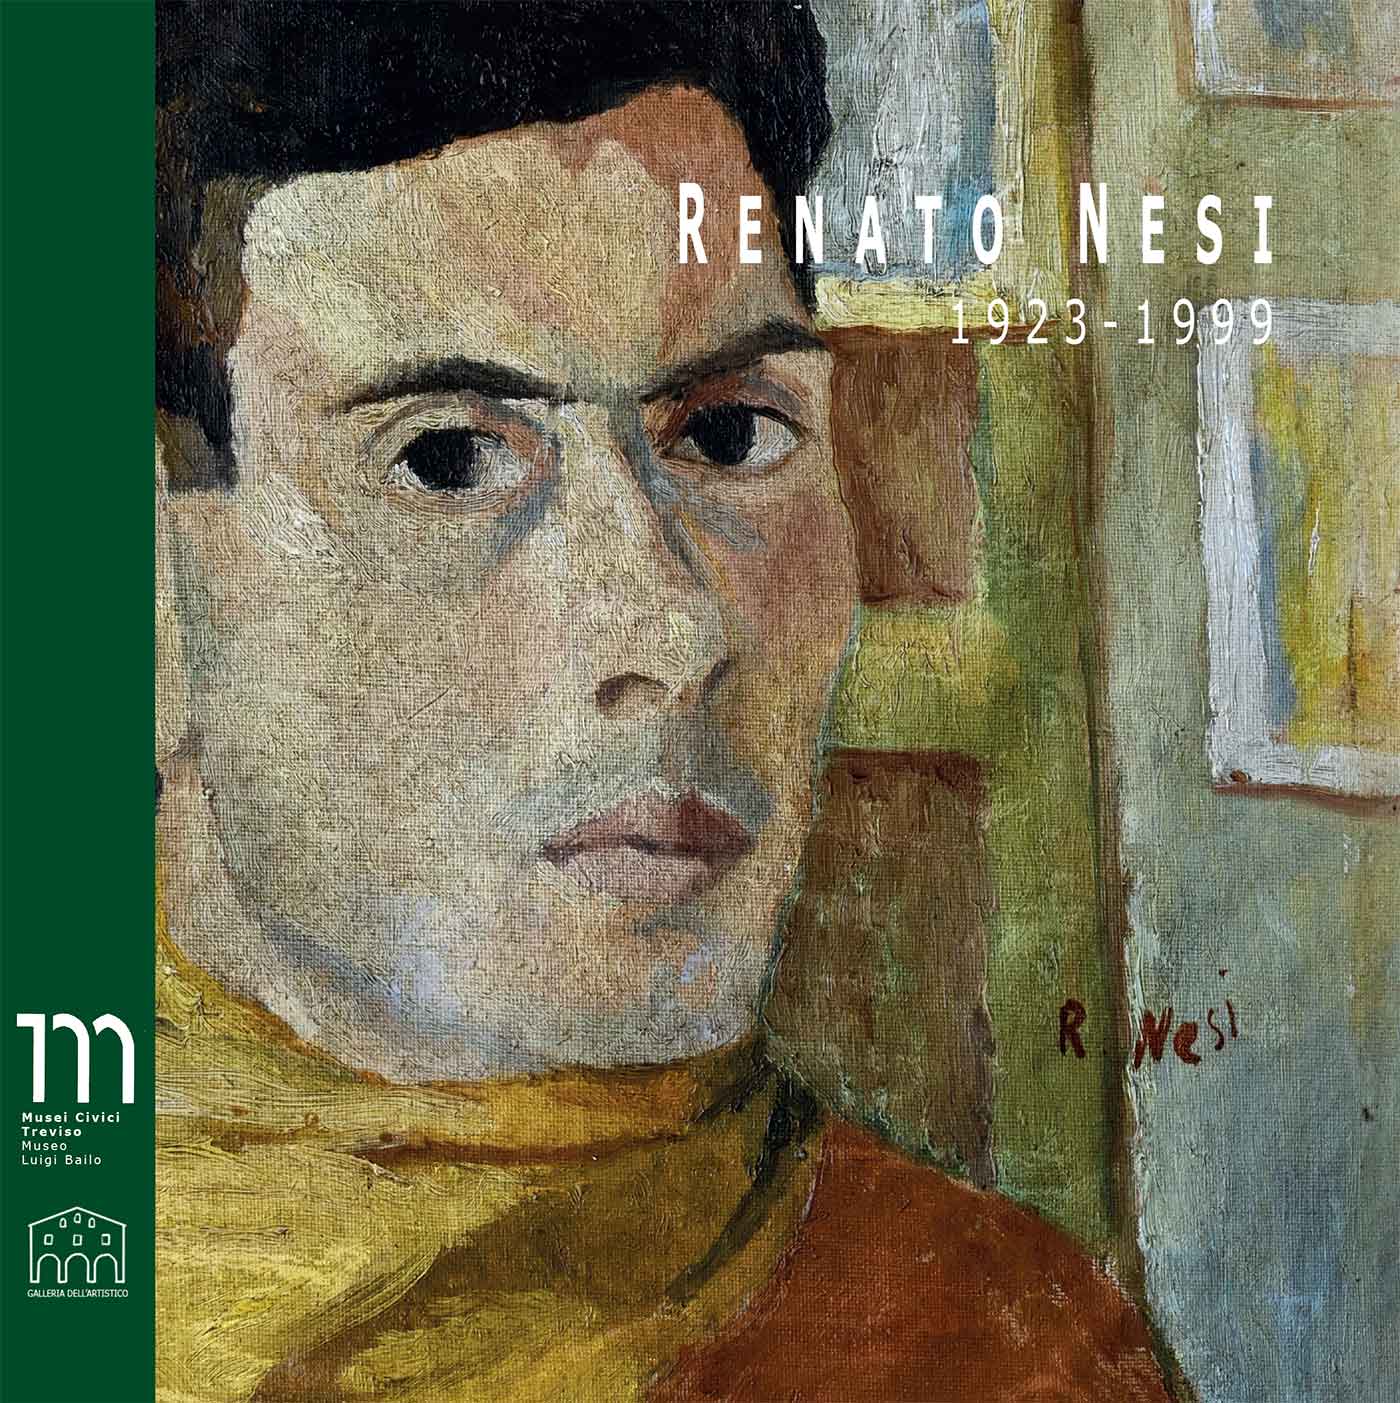 Catalogo Mostra "Renato Nesi 1923-1999"